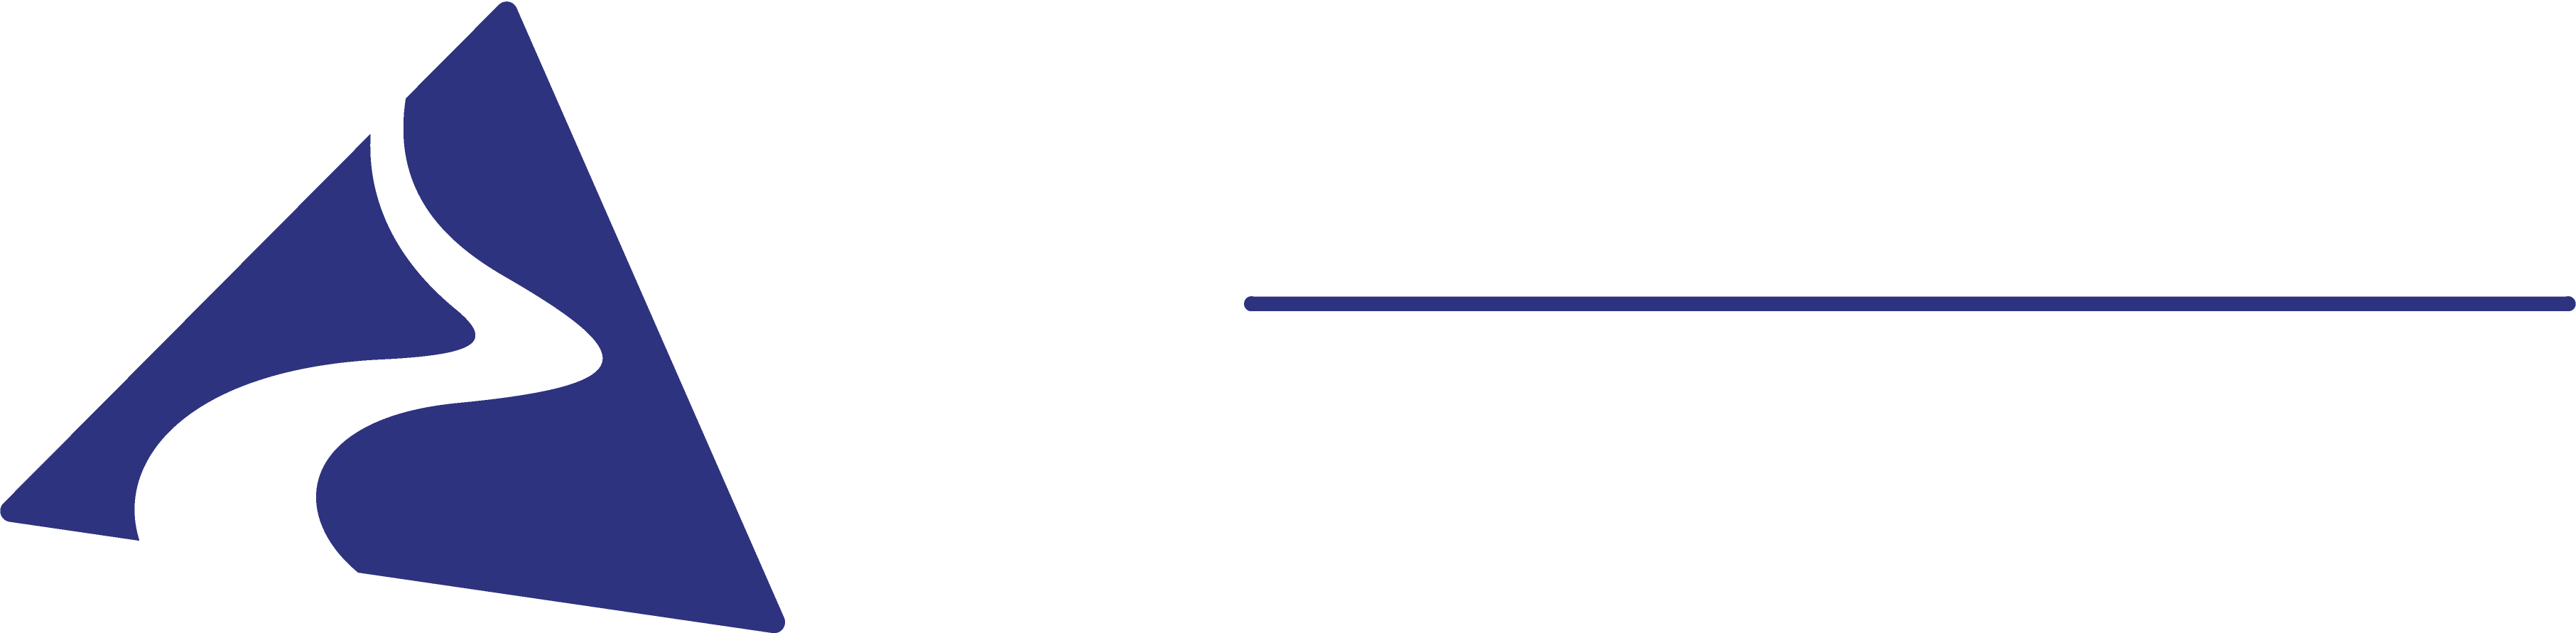 TFCC blue logo